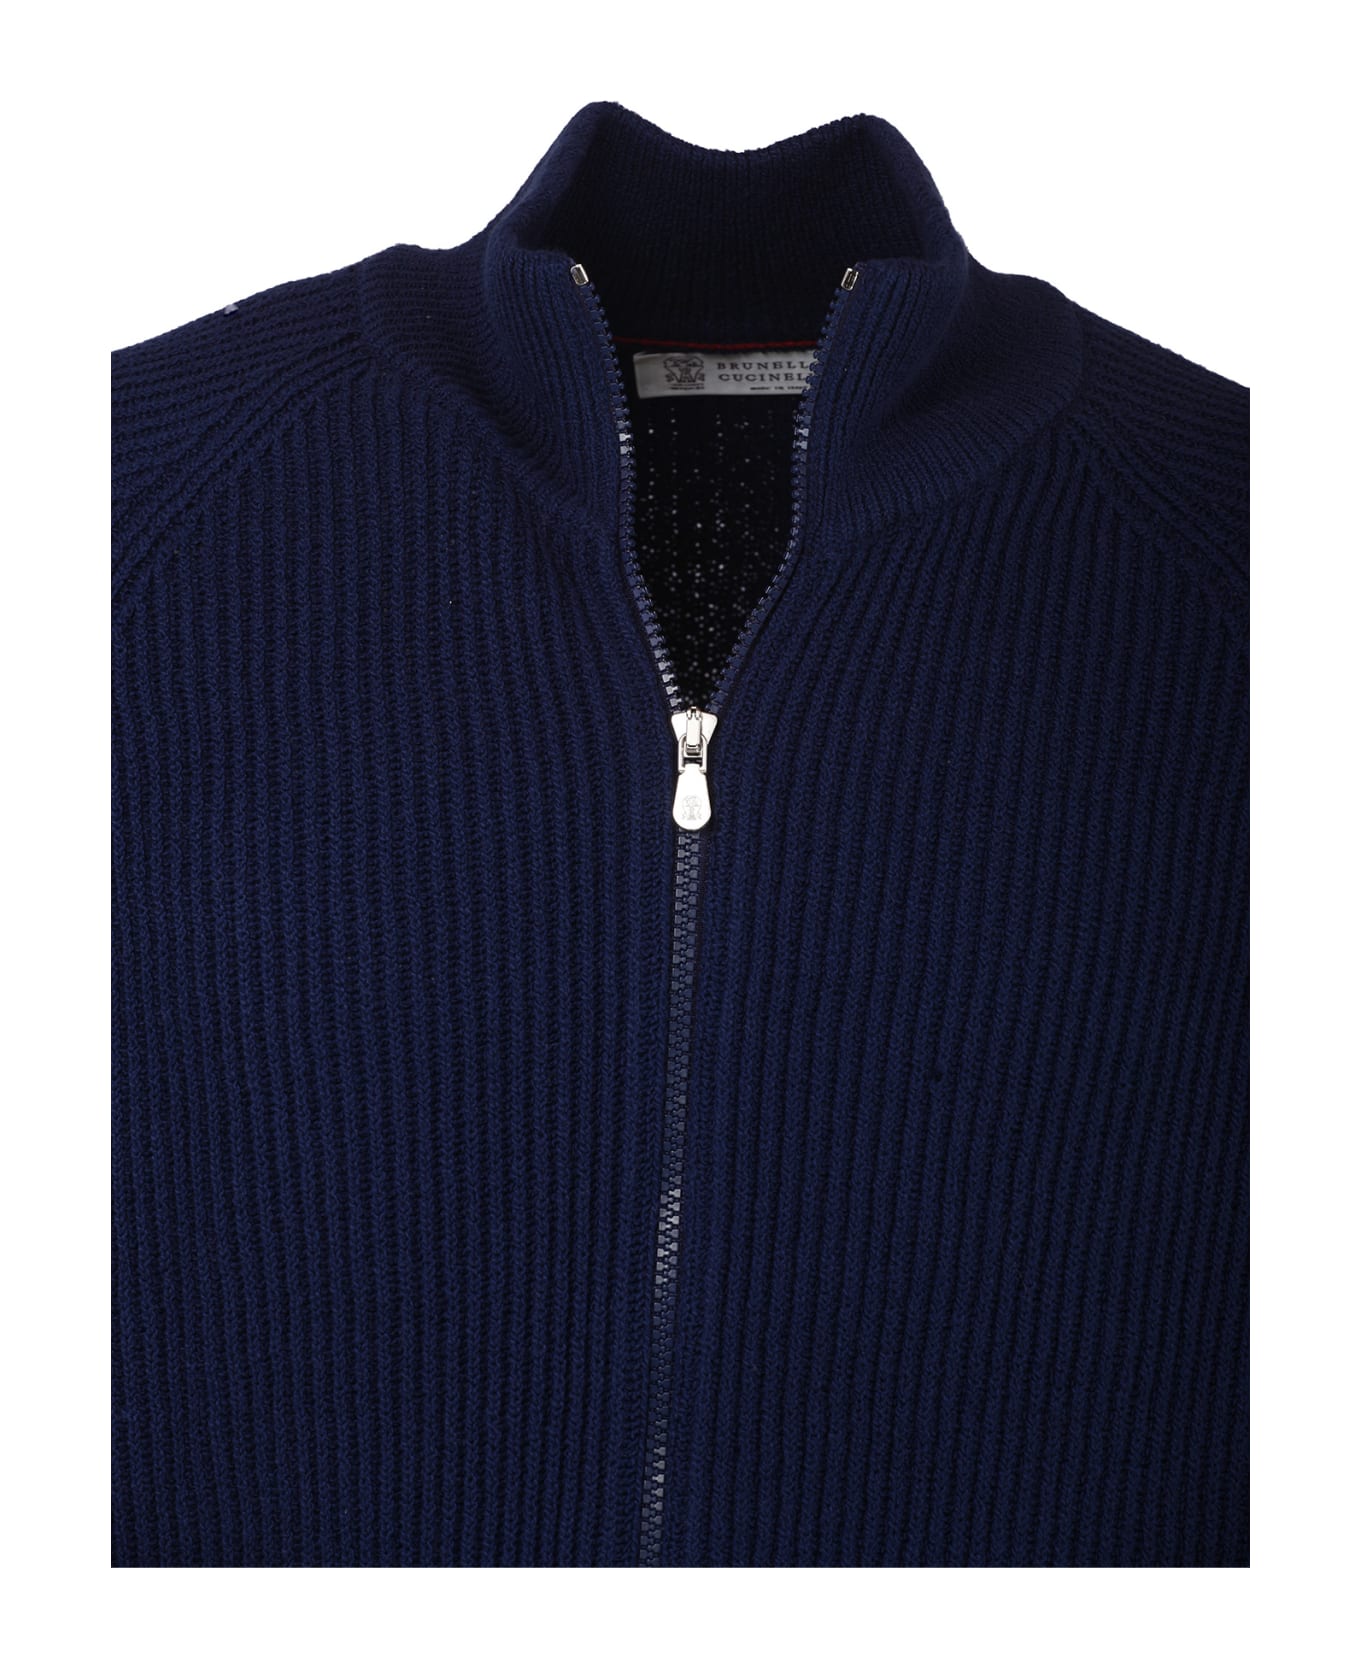 Brunello Cucinelli Sweaters Blue - Blue カーディガン